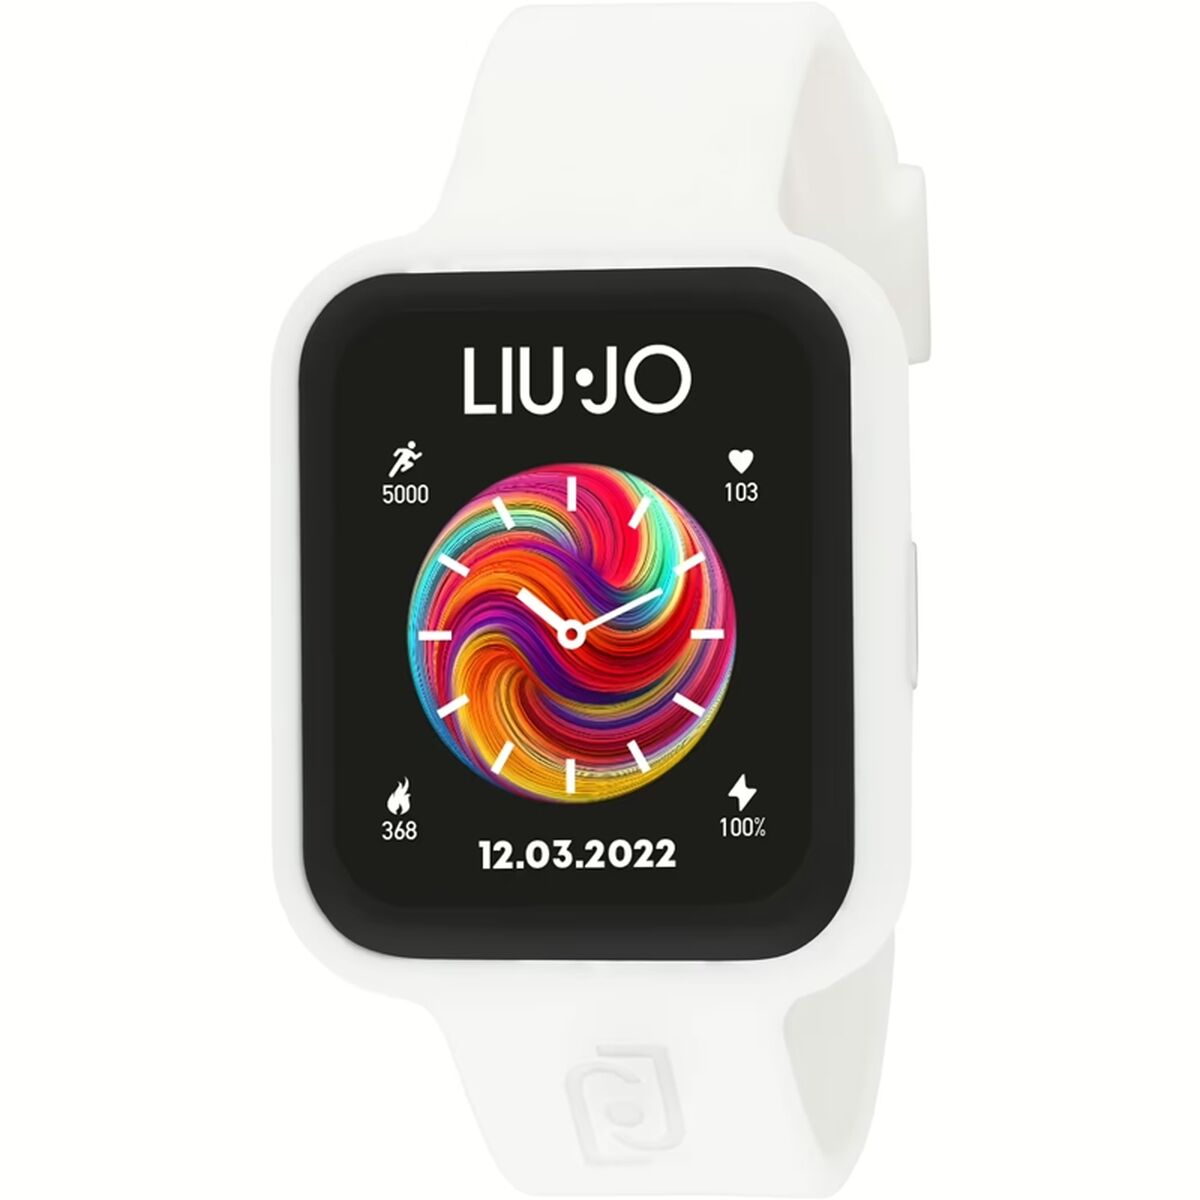 Kaufe Smartwatch LIU JO SWLJ129 bei AWK Flagship um € 123.00